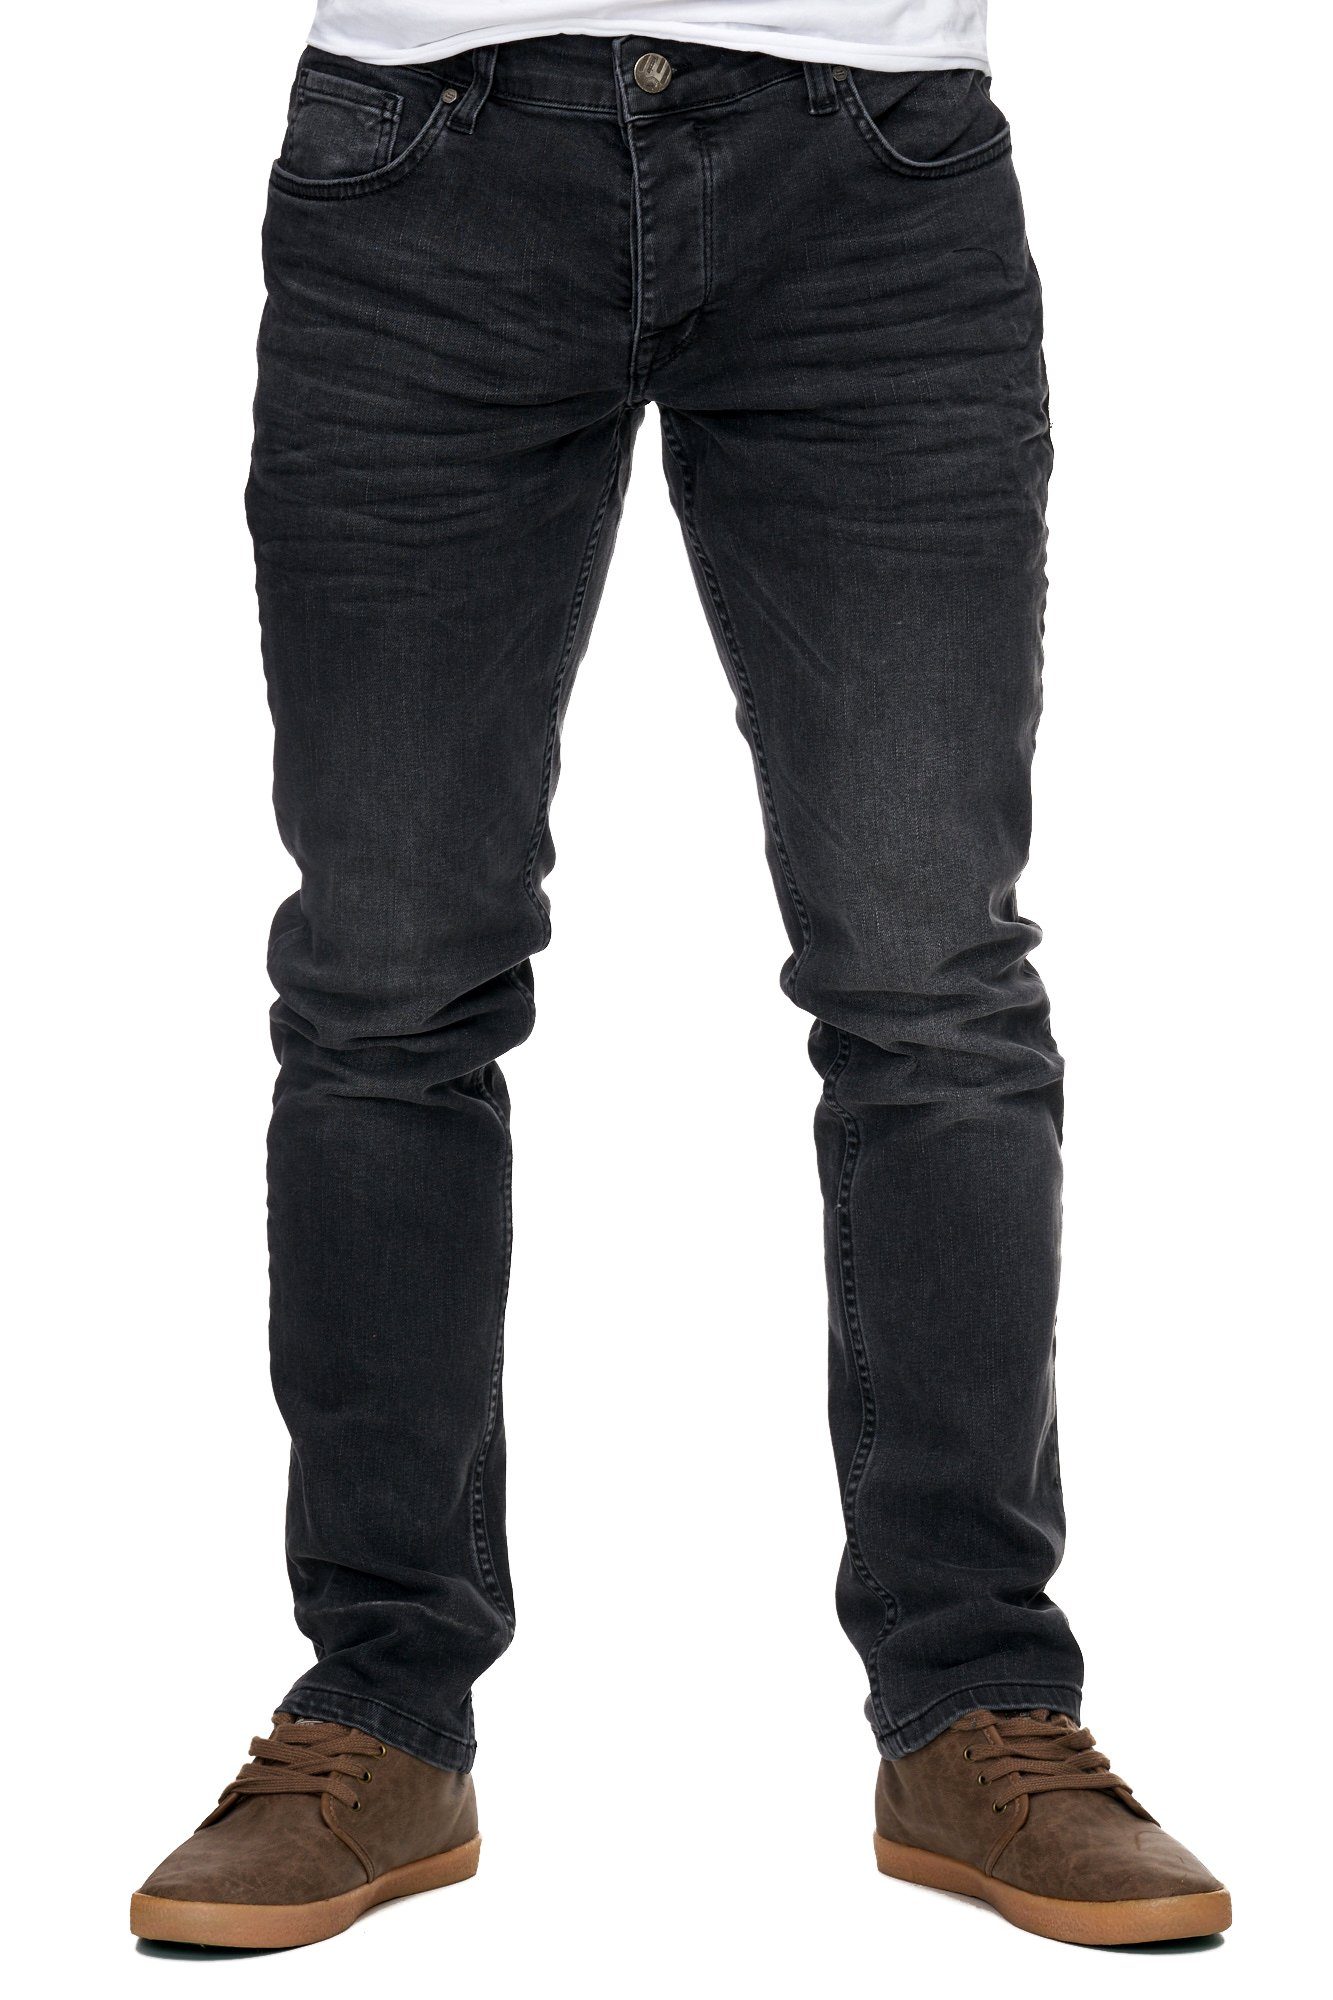 Slim Stretch-Denim Slim Reslad Jeans-Hose Jeans-Hose Stretch Basic Reslad schwarz Fit Style Fit Stretch-Jeans Jeans-Herren